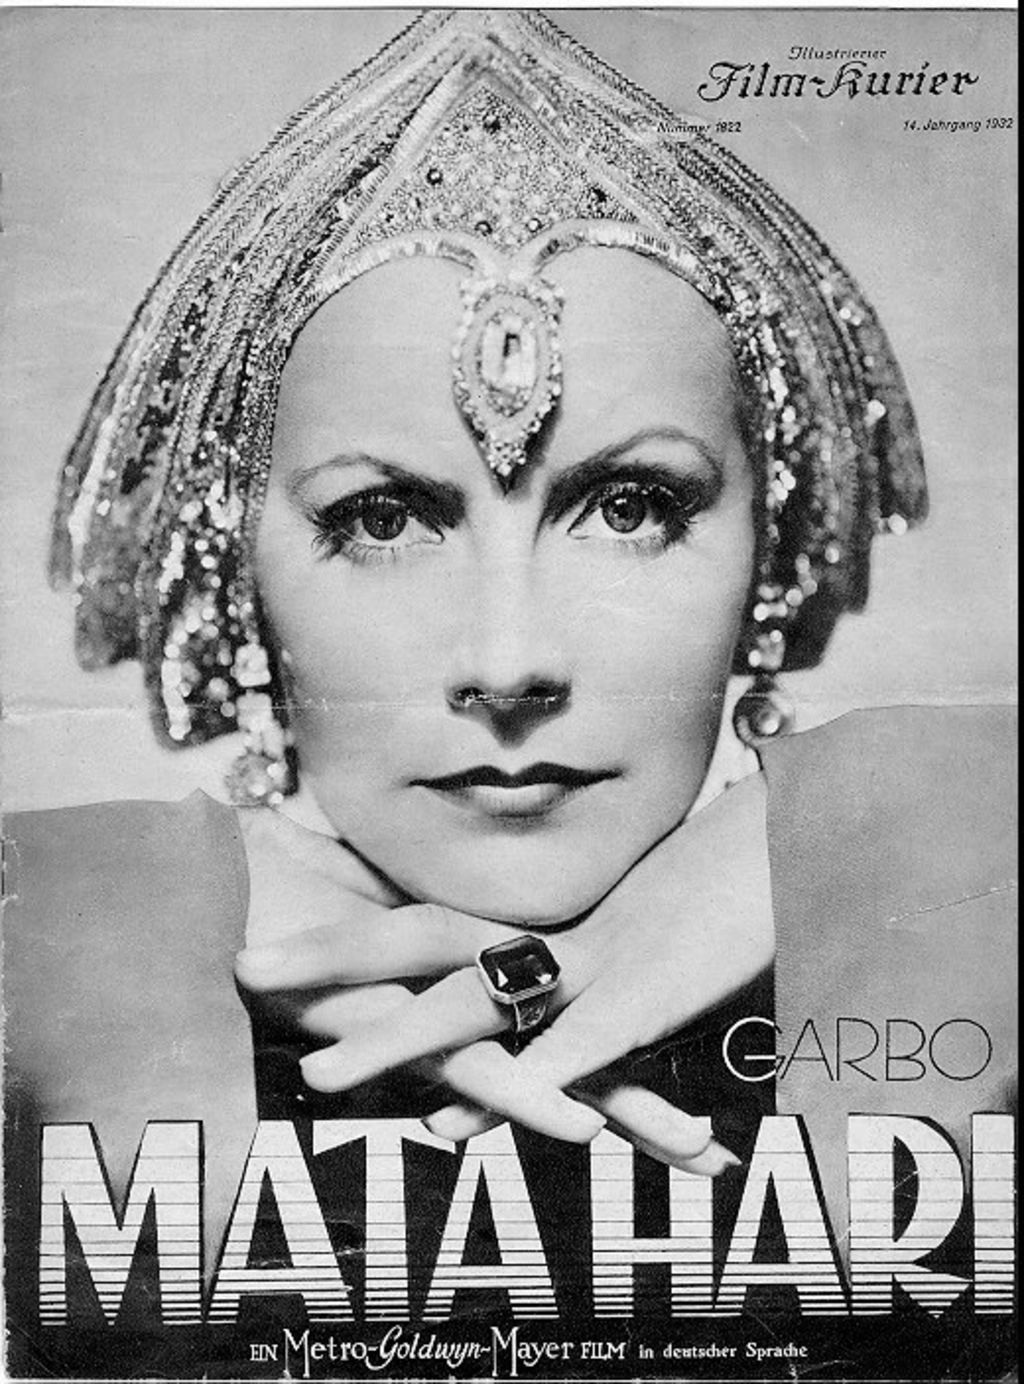 Film programme for "Mata Hari" with Greta Garbo, Illustrierter Film-Kurier Nr. 1822, Film-Kurier GmbH, Print, Berlin, 1932 © DHM